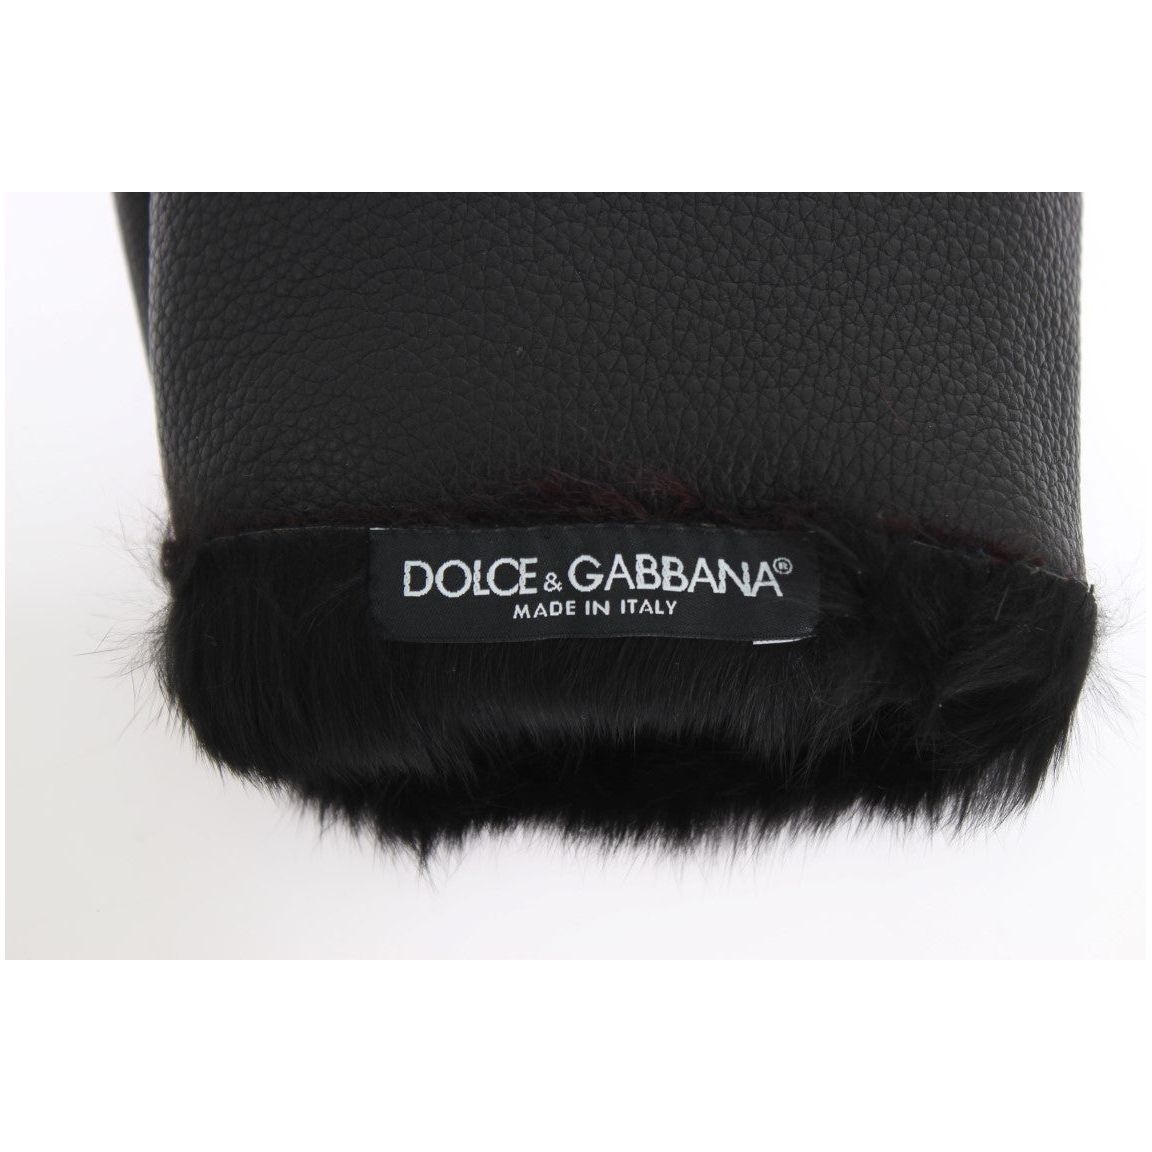 Dolce & Gabbana Elegant Black & Bordeaux Leather Gloves black-leather-bordeaux-shearling-gloves